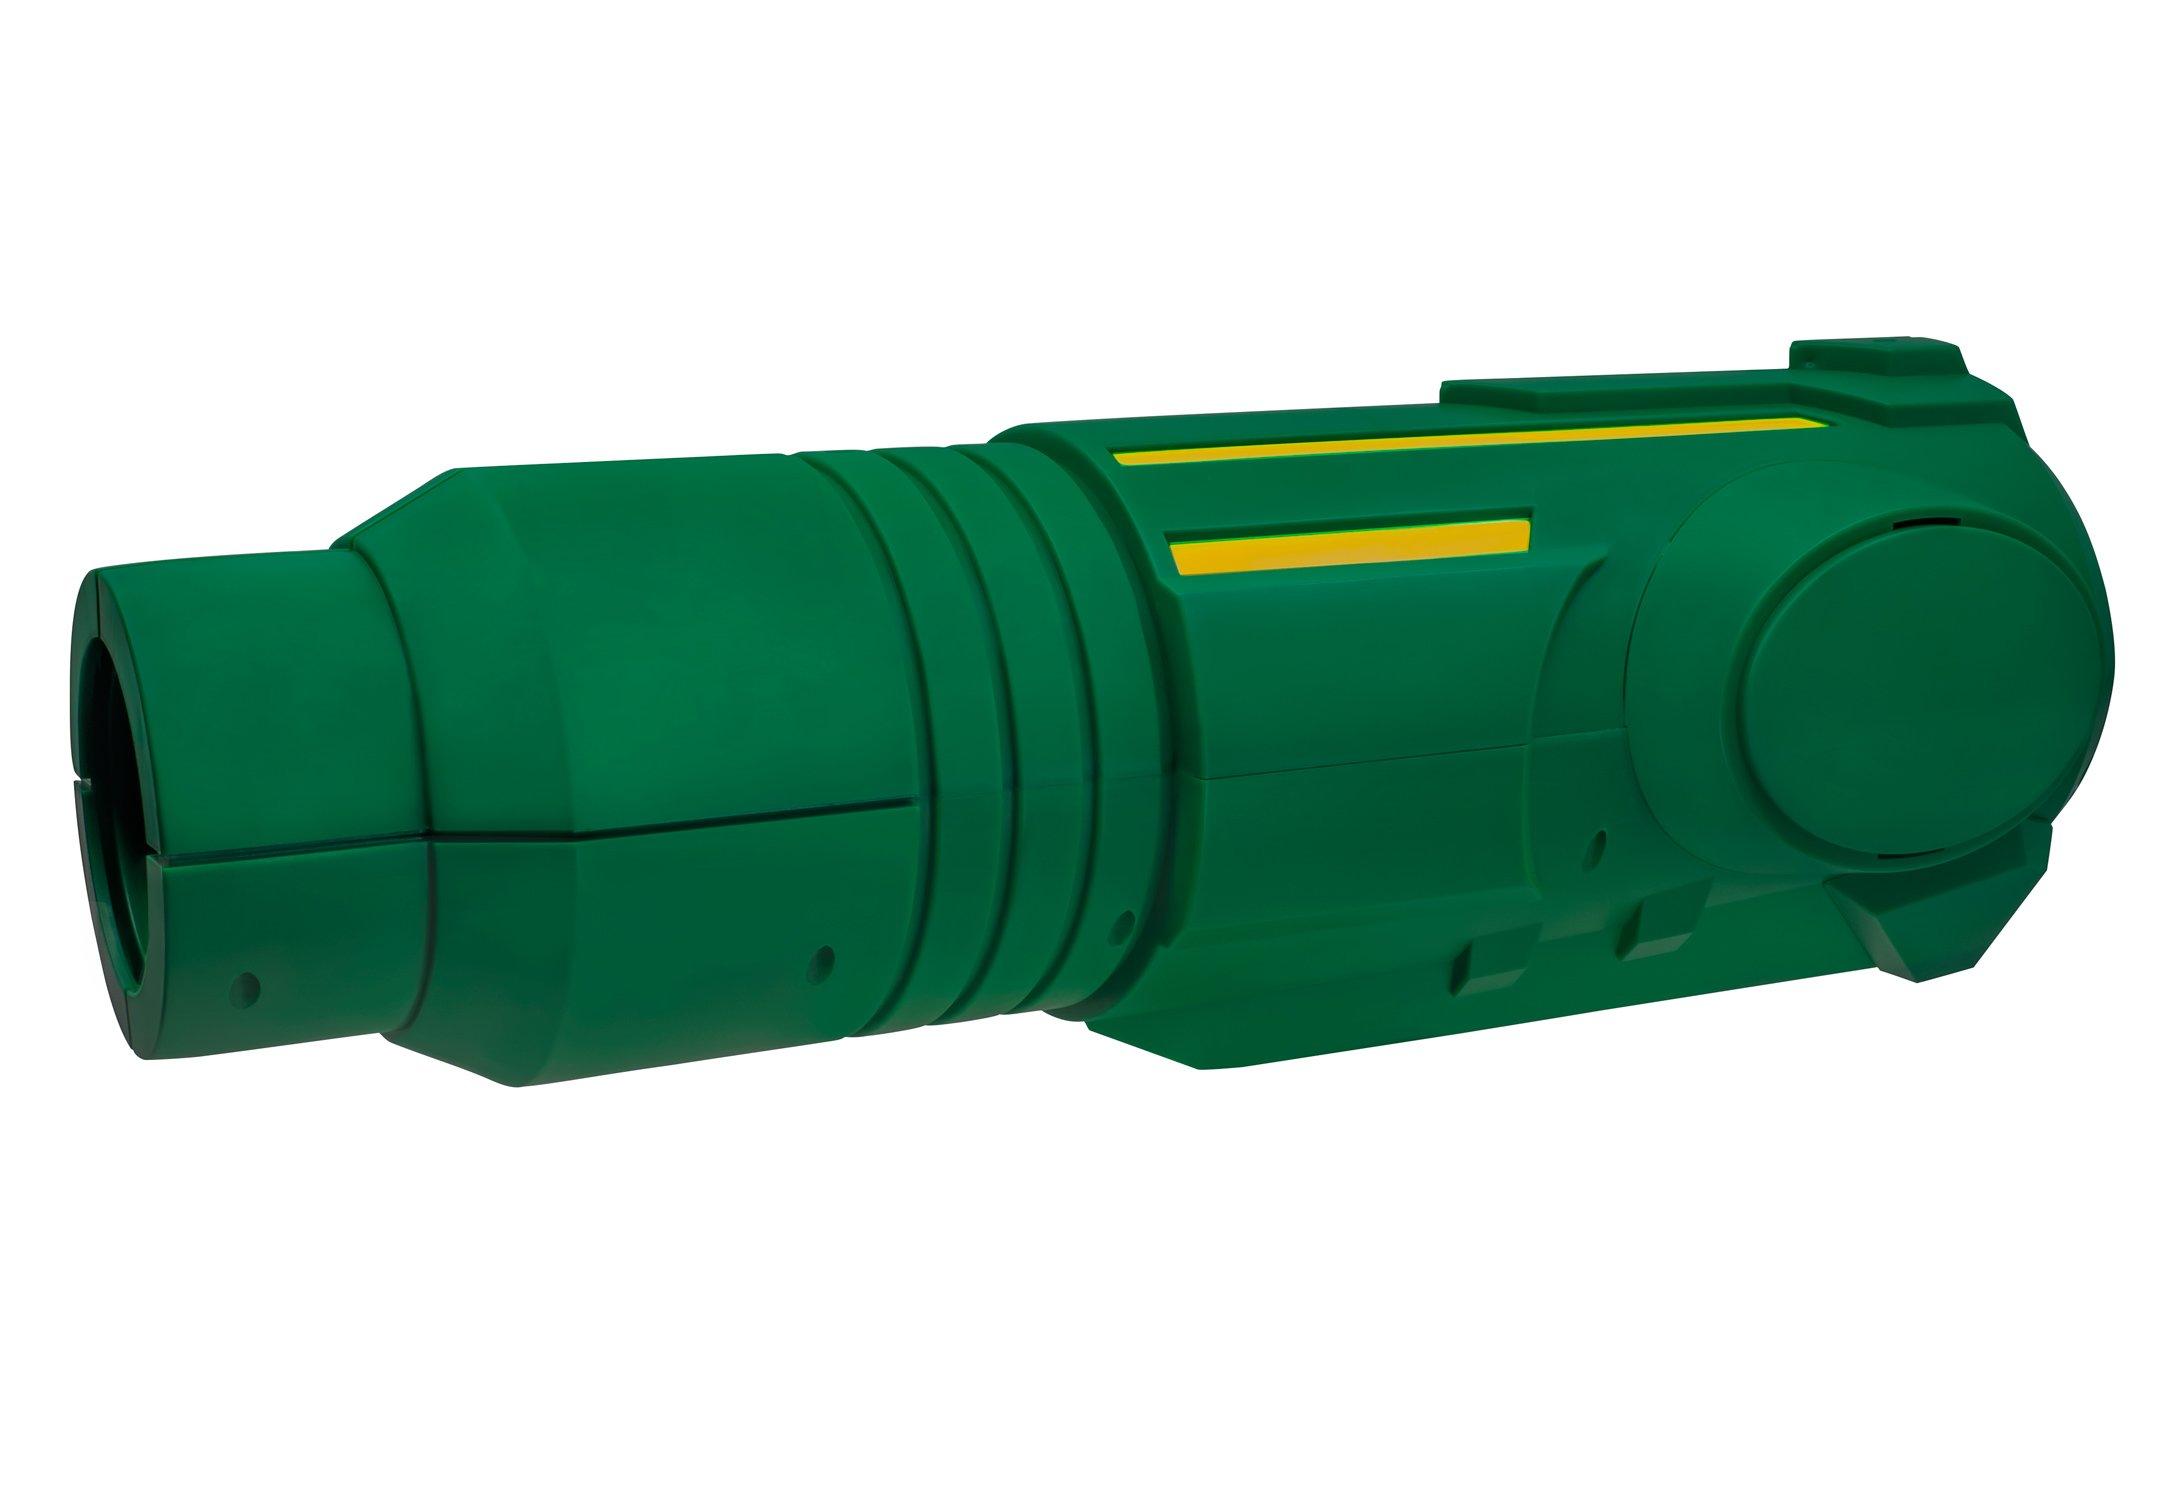 Metroid Samus Aran's Arm Cannon